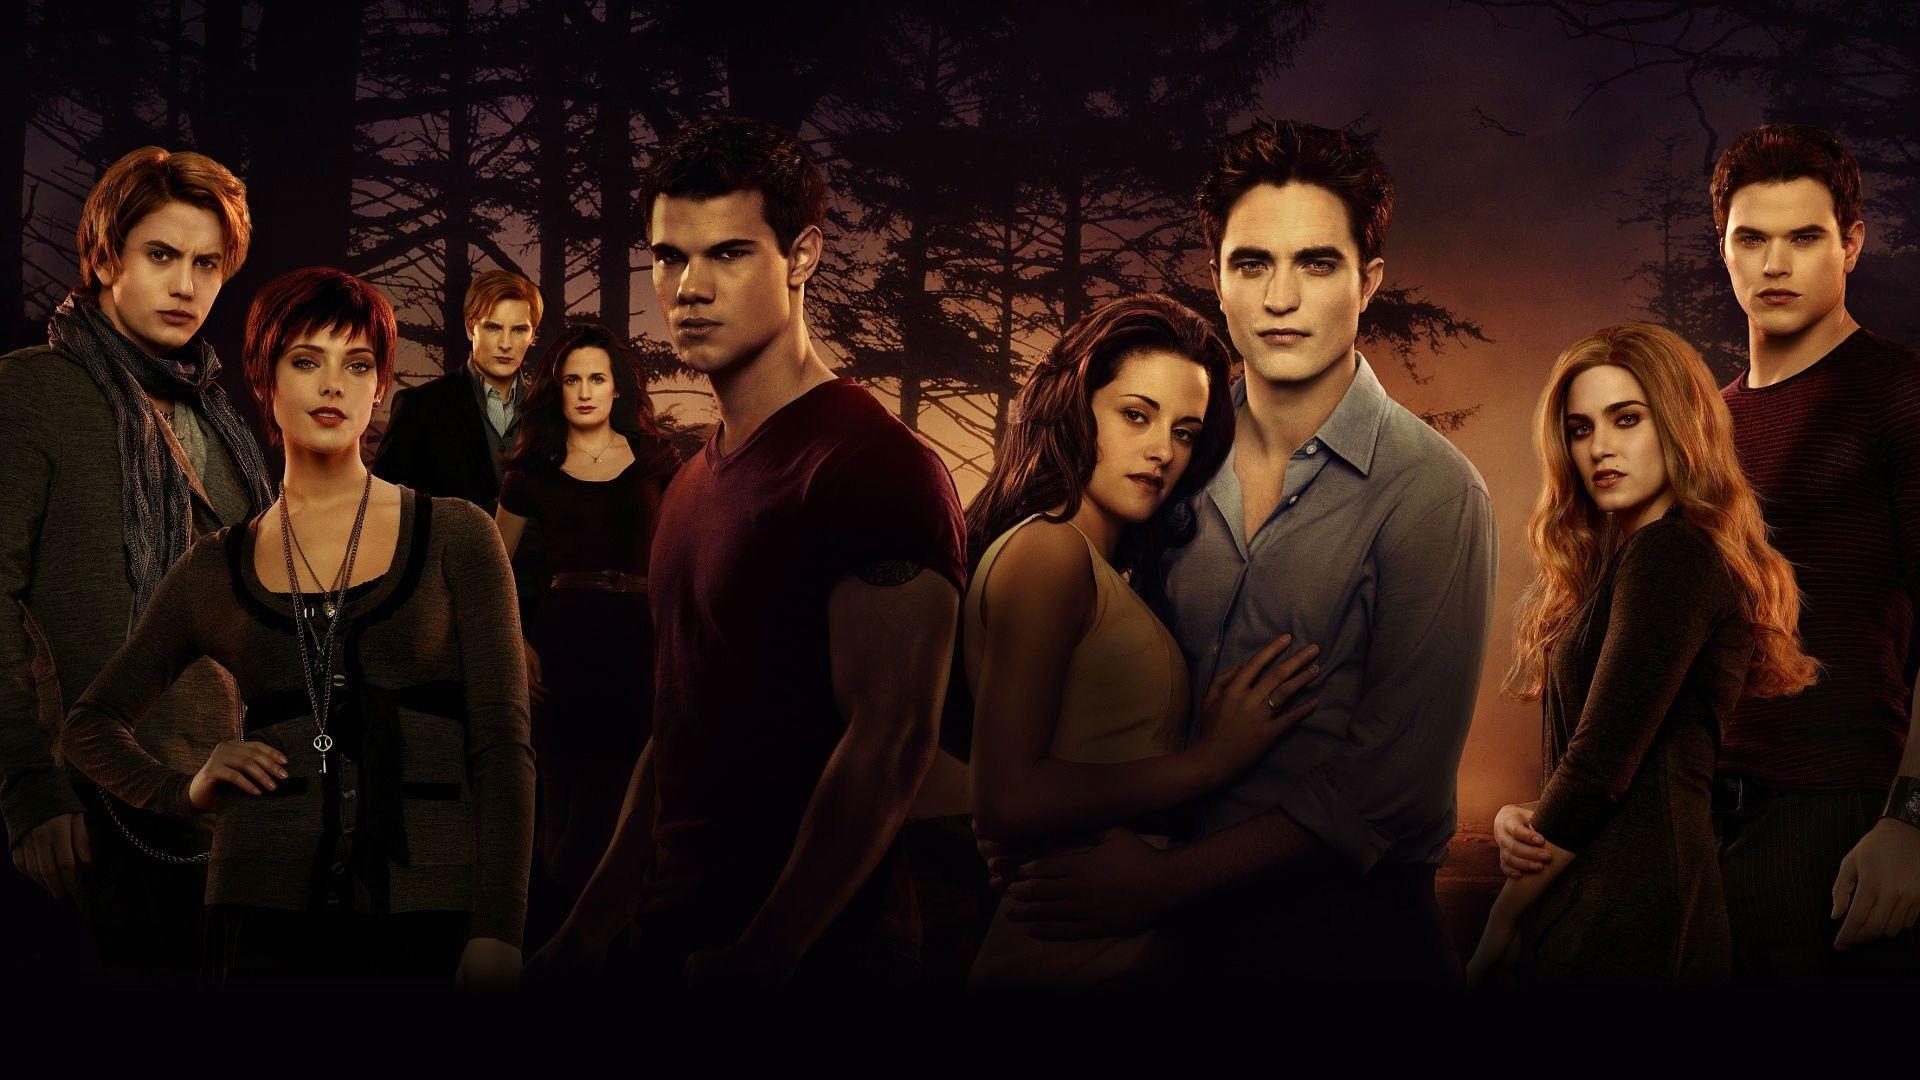 Twilight Saga Wallpapers Top Free Twilight Saga Backgrounds